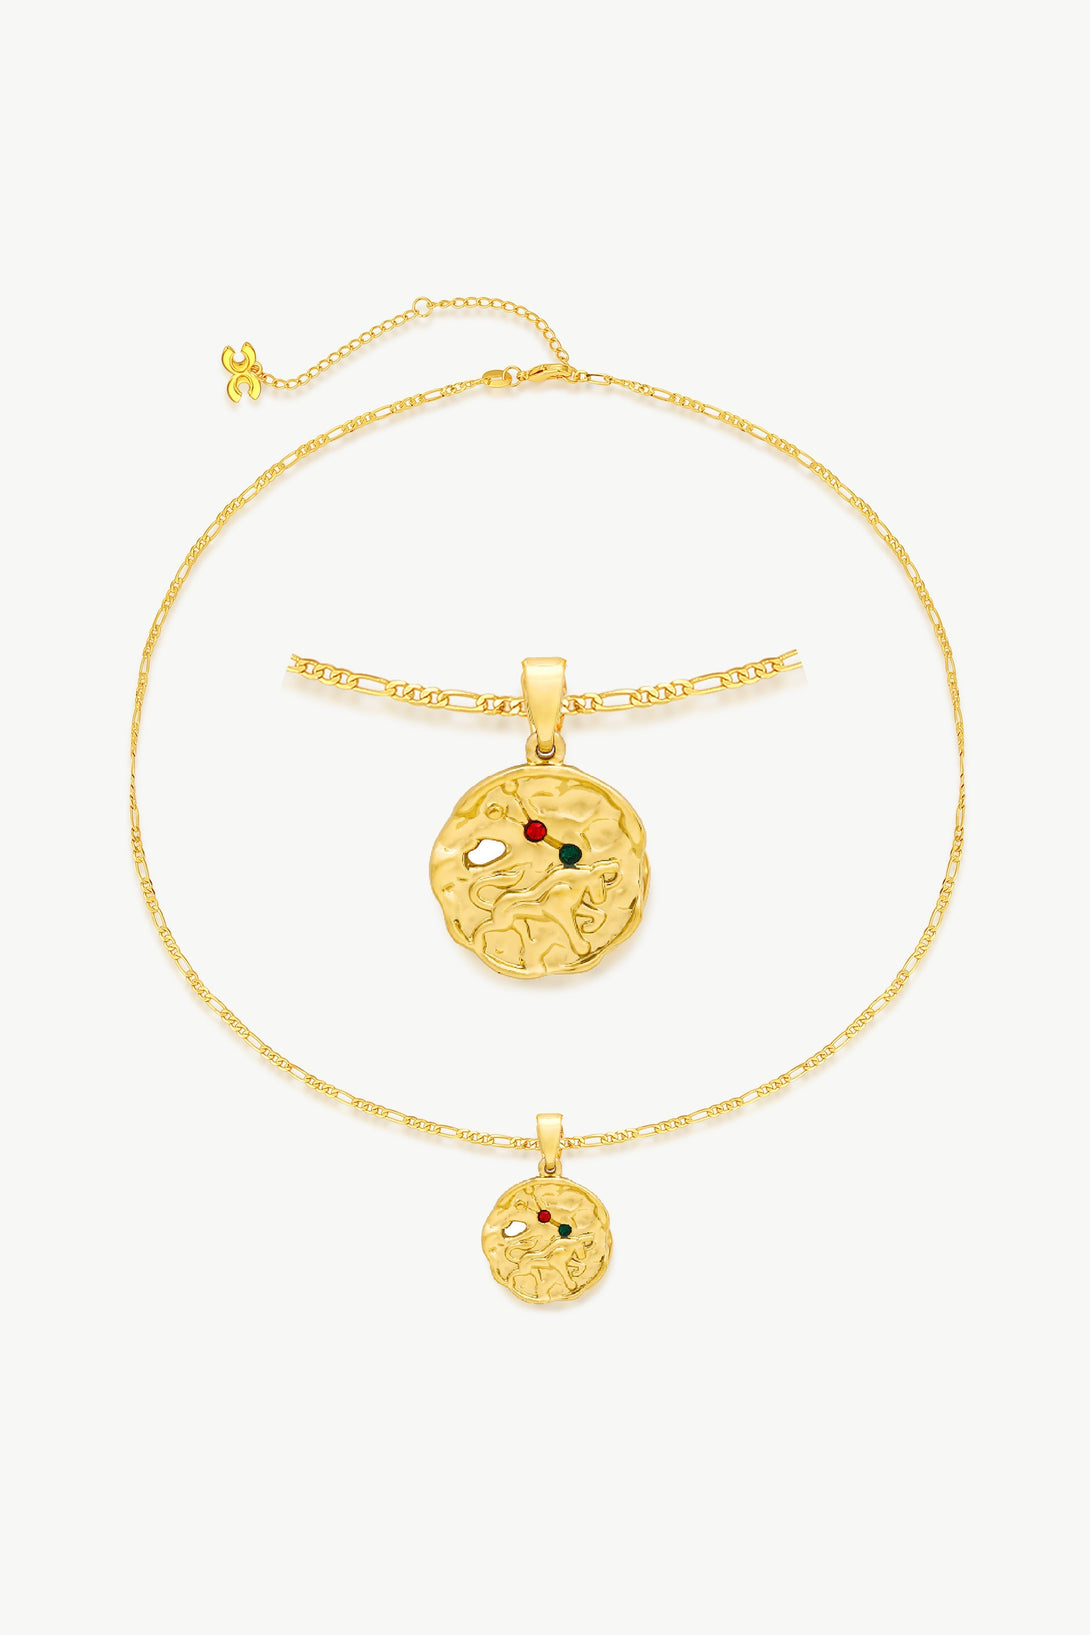 Gold Sculptural Zodiac Sign Pendant Necklace Set-Taurus - Classicharms